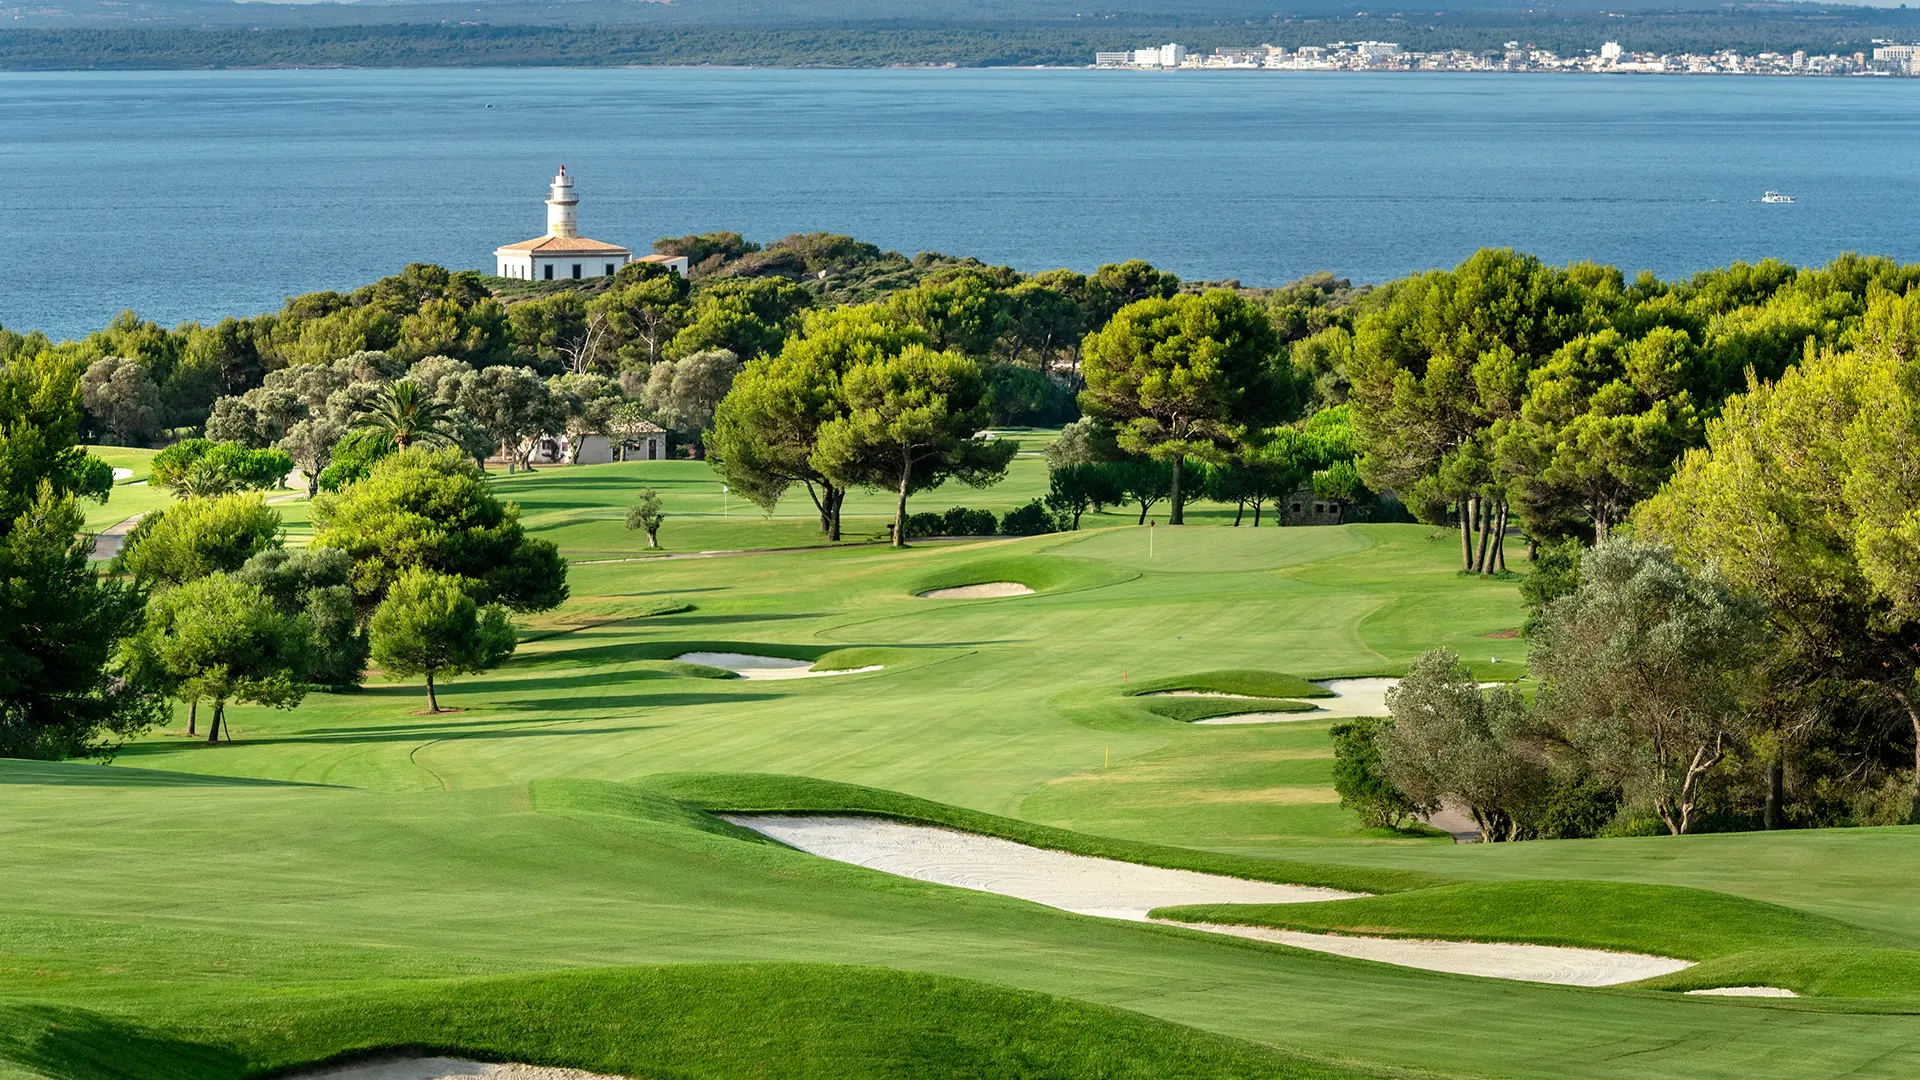 Spain golf holidays - Fuerte Marbella Spain - Photo 2